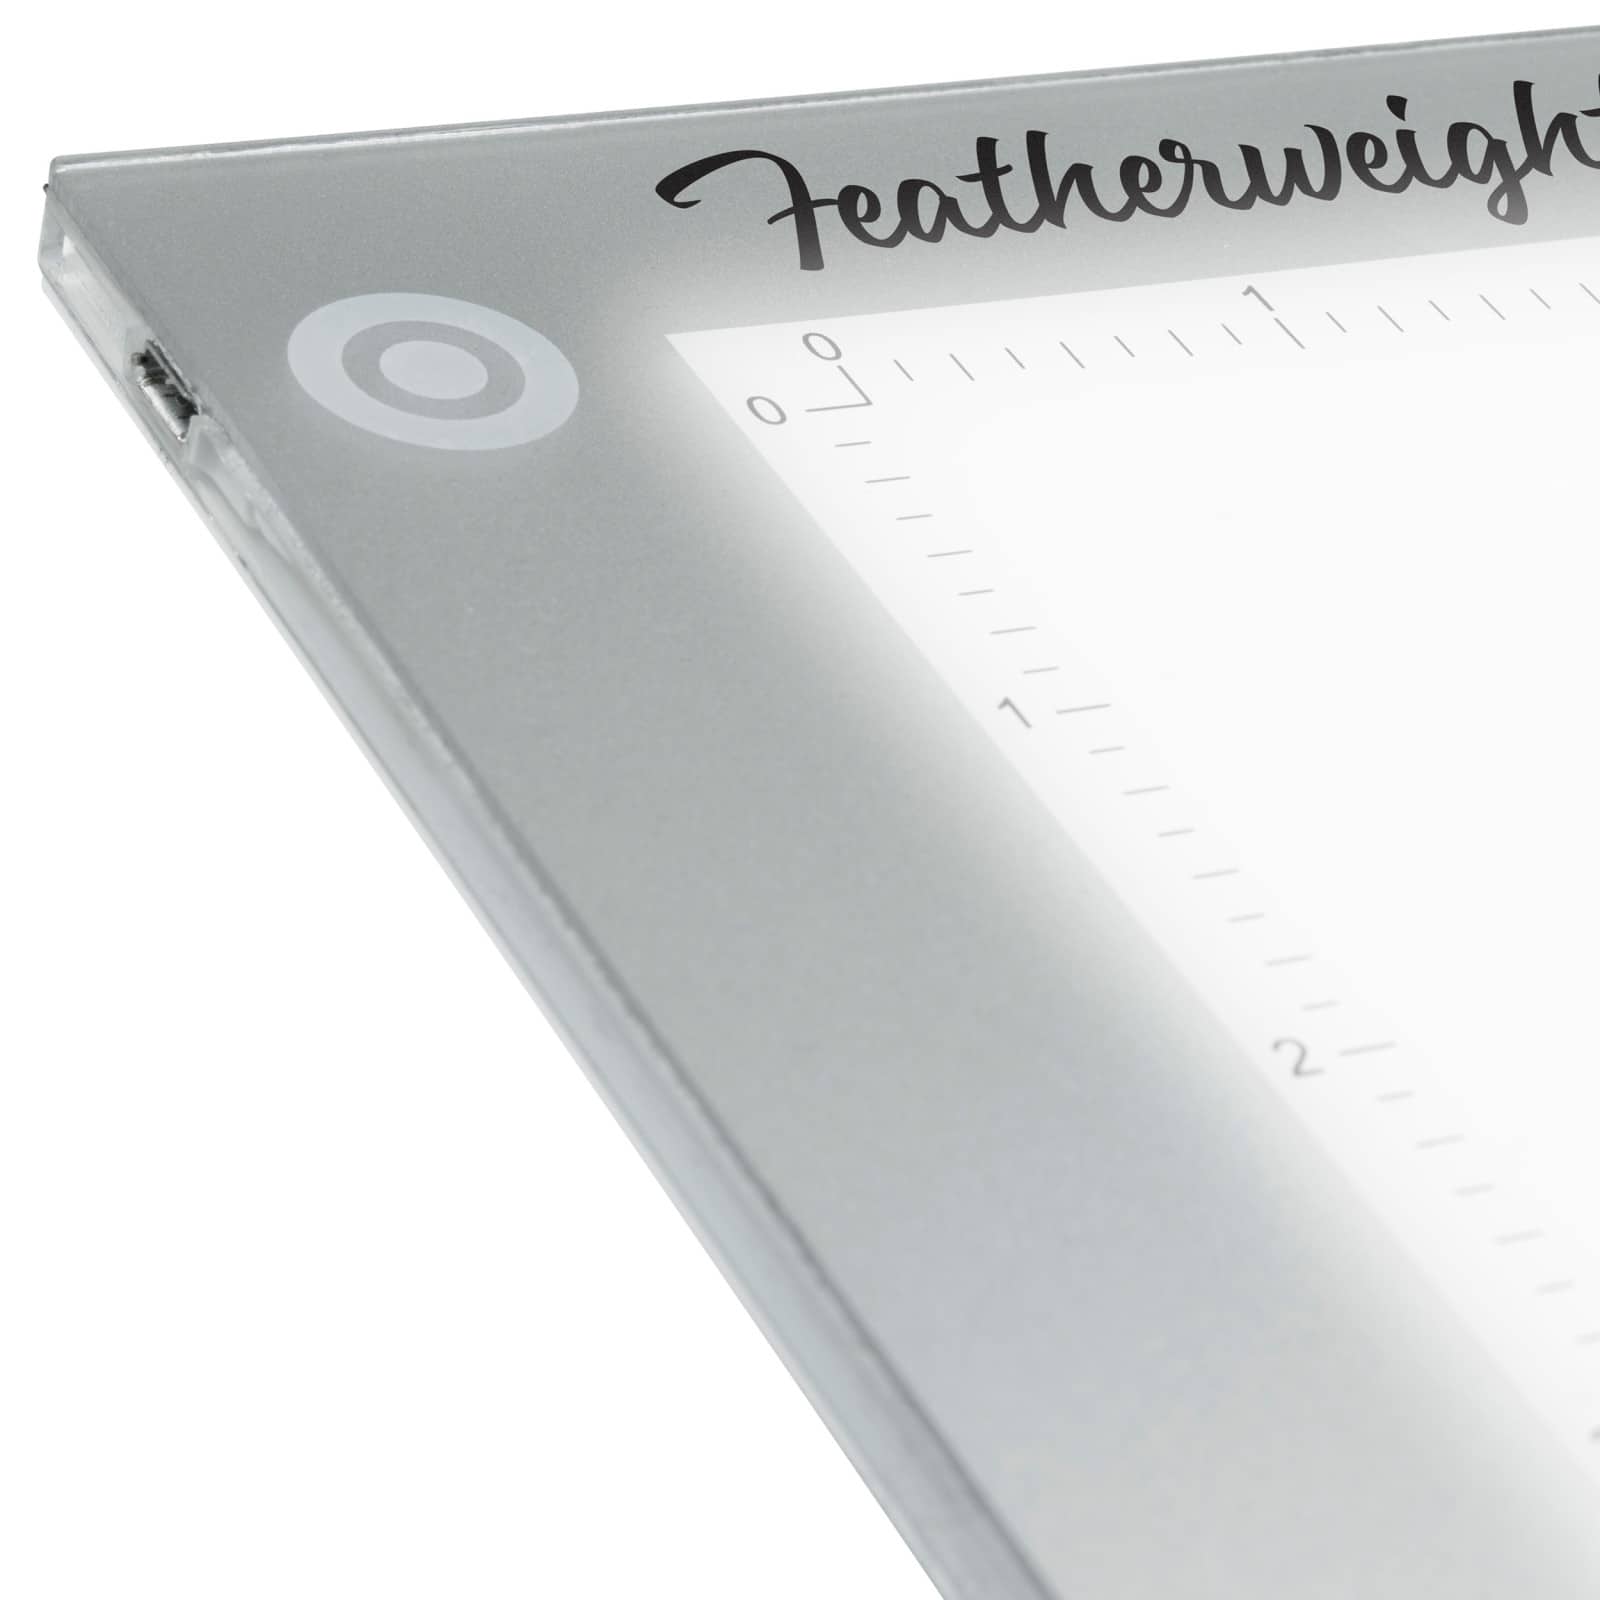 Artograph Featherweight LightPad, 9&#x22; x 12&#x22;